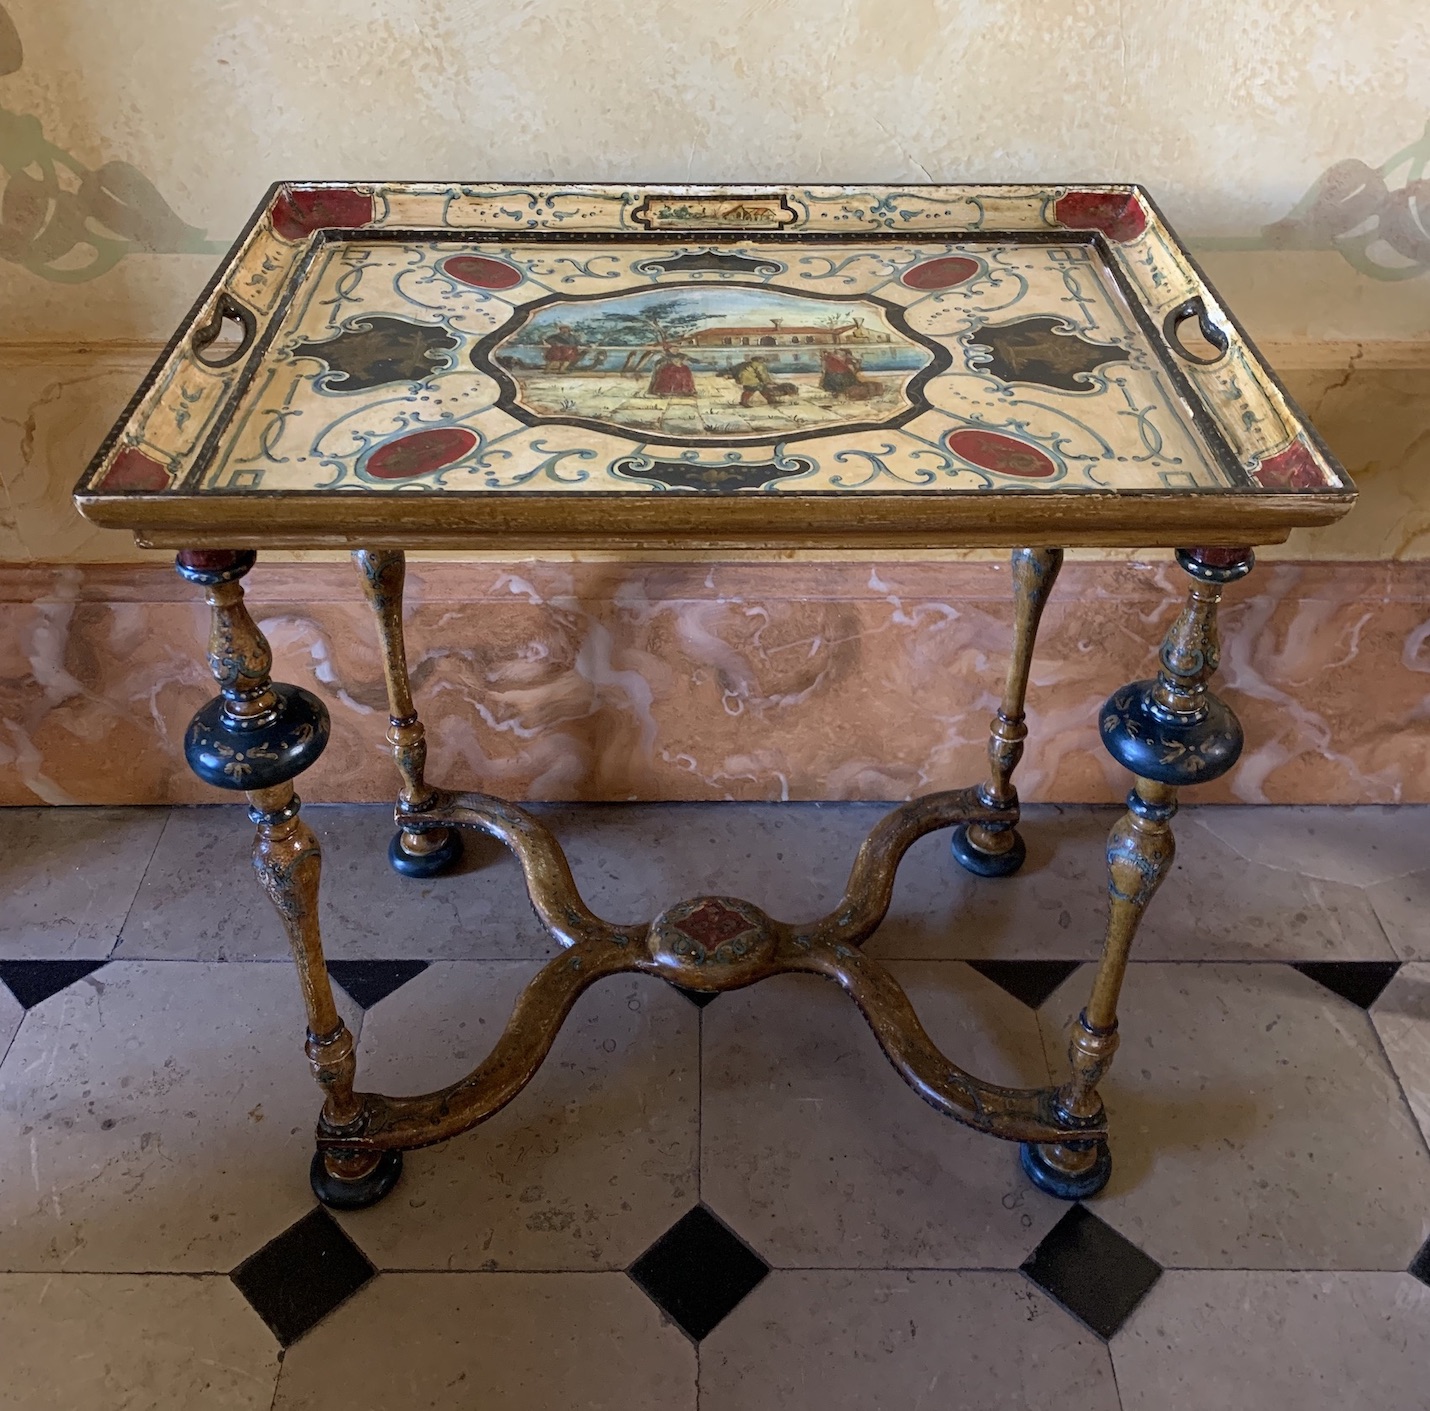 Table cabaret début XVIIIe siècle, Italie